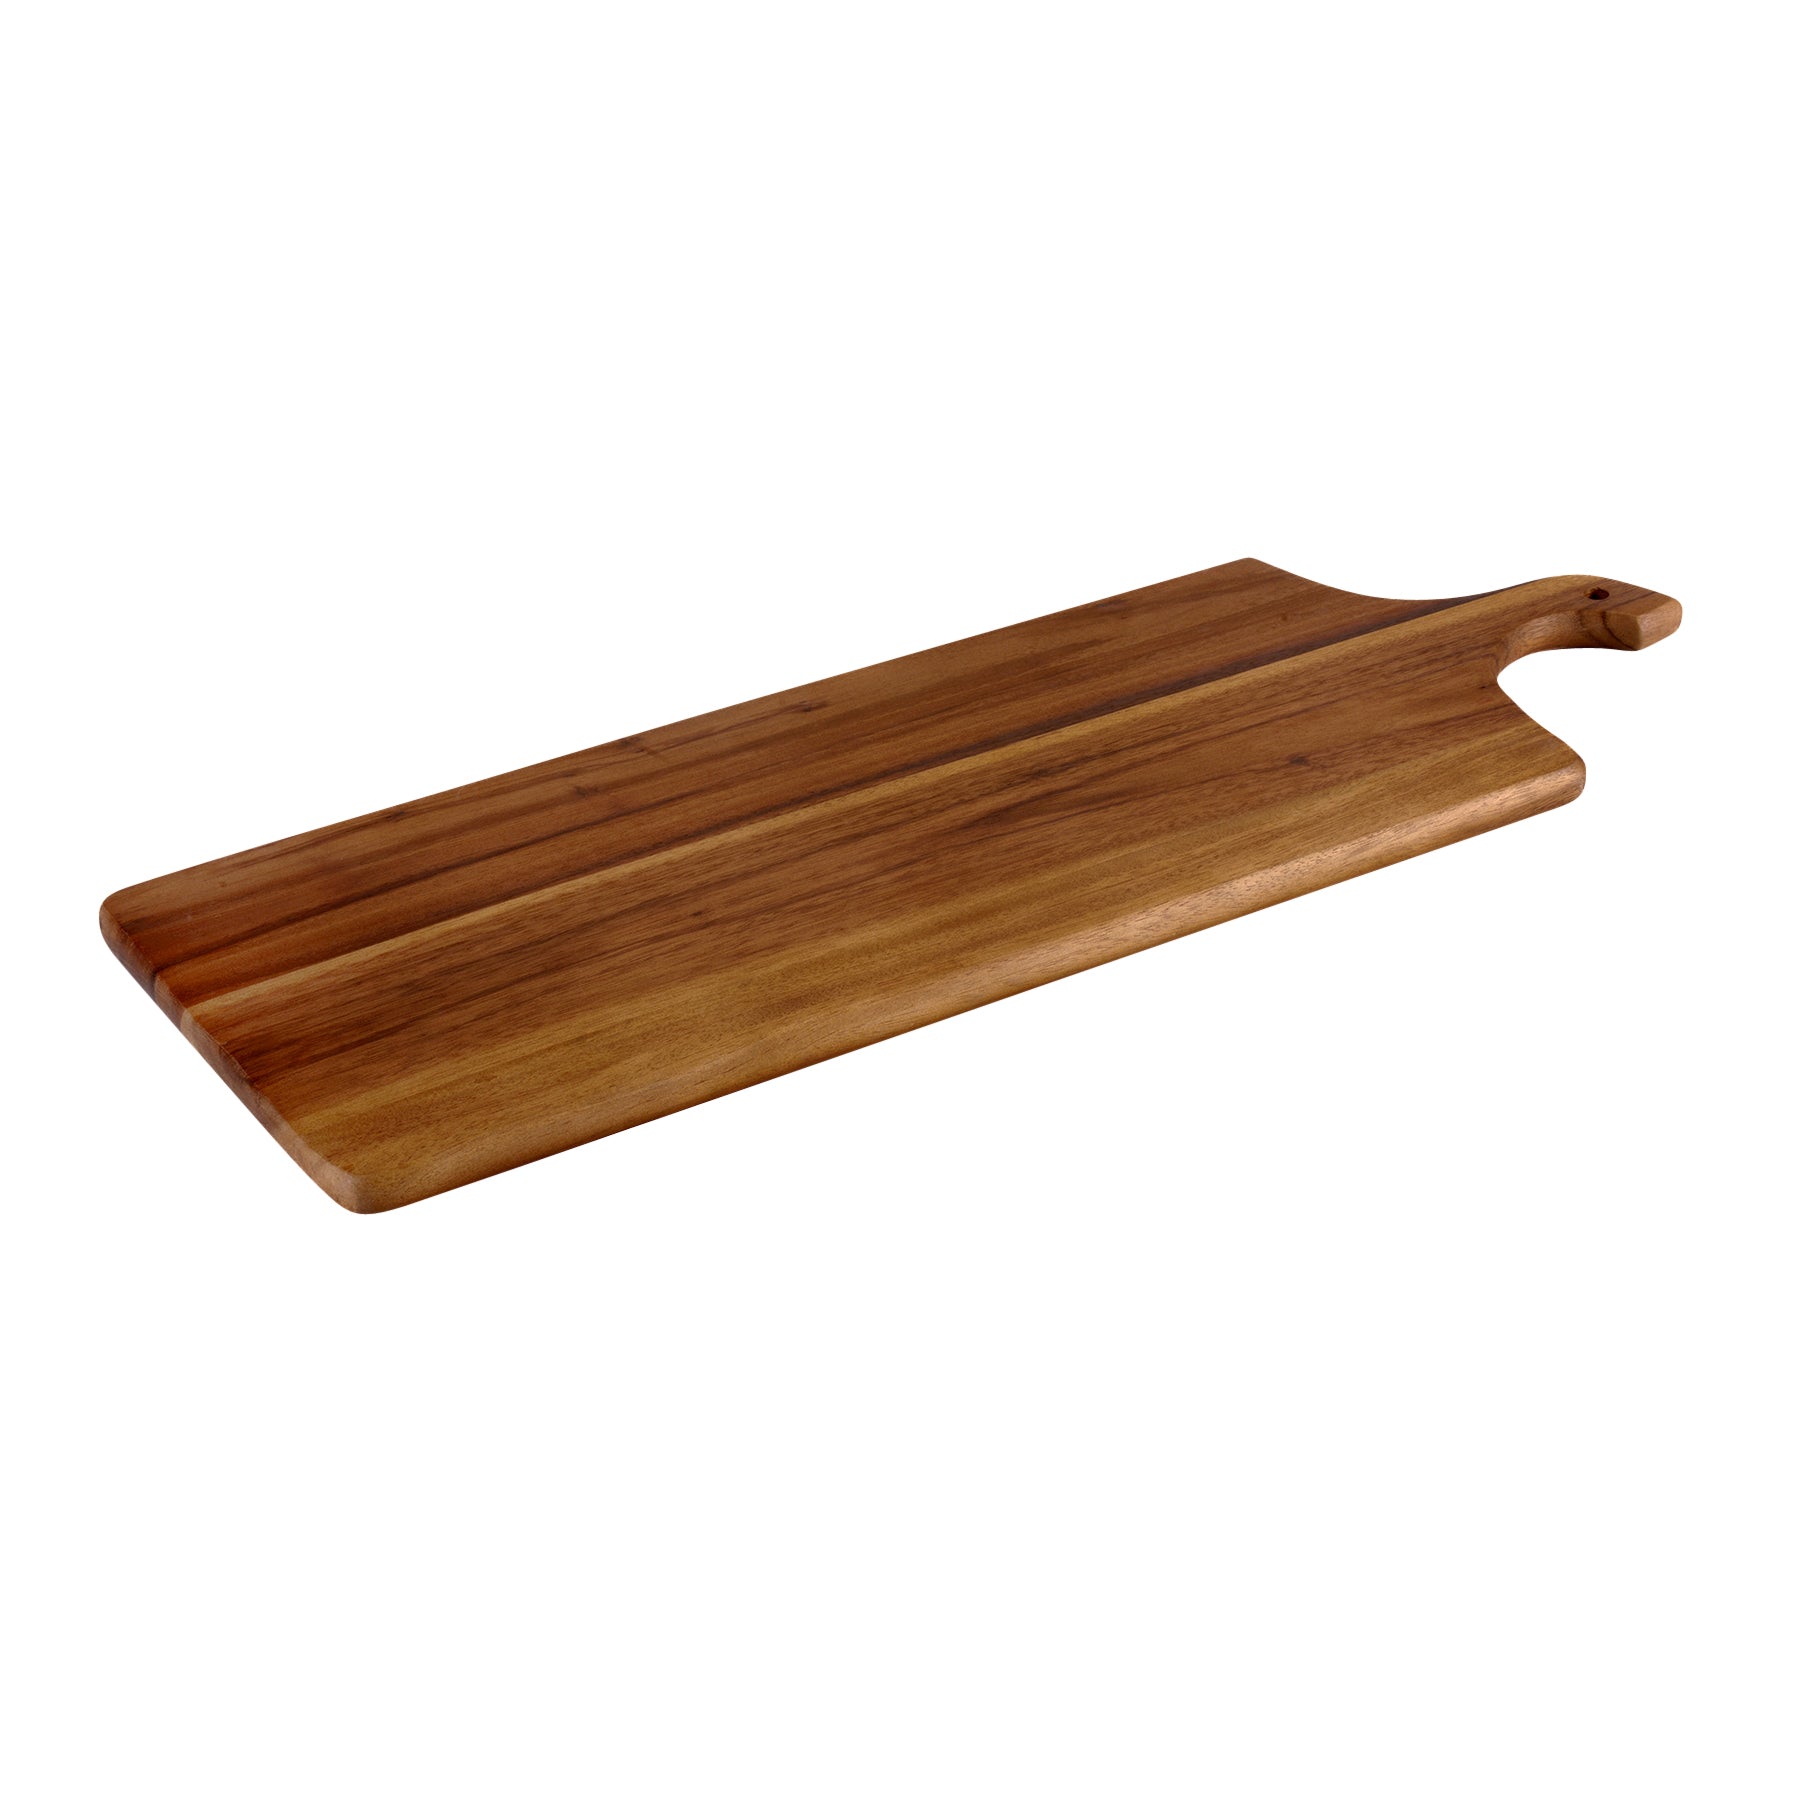 Oversized cutting Board / Charcuterie Board